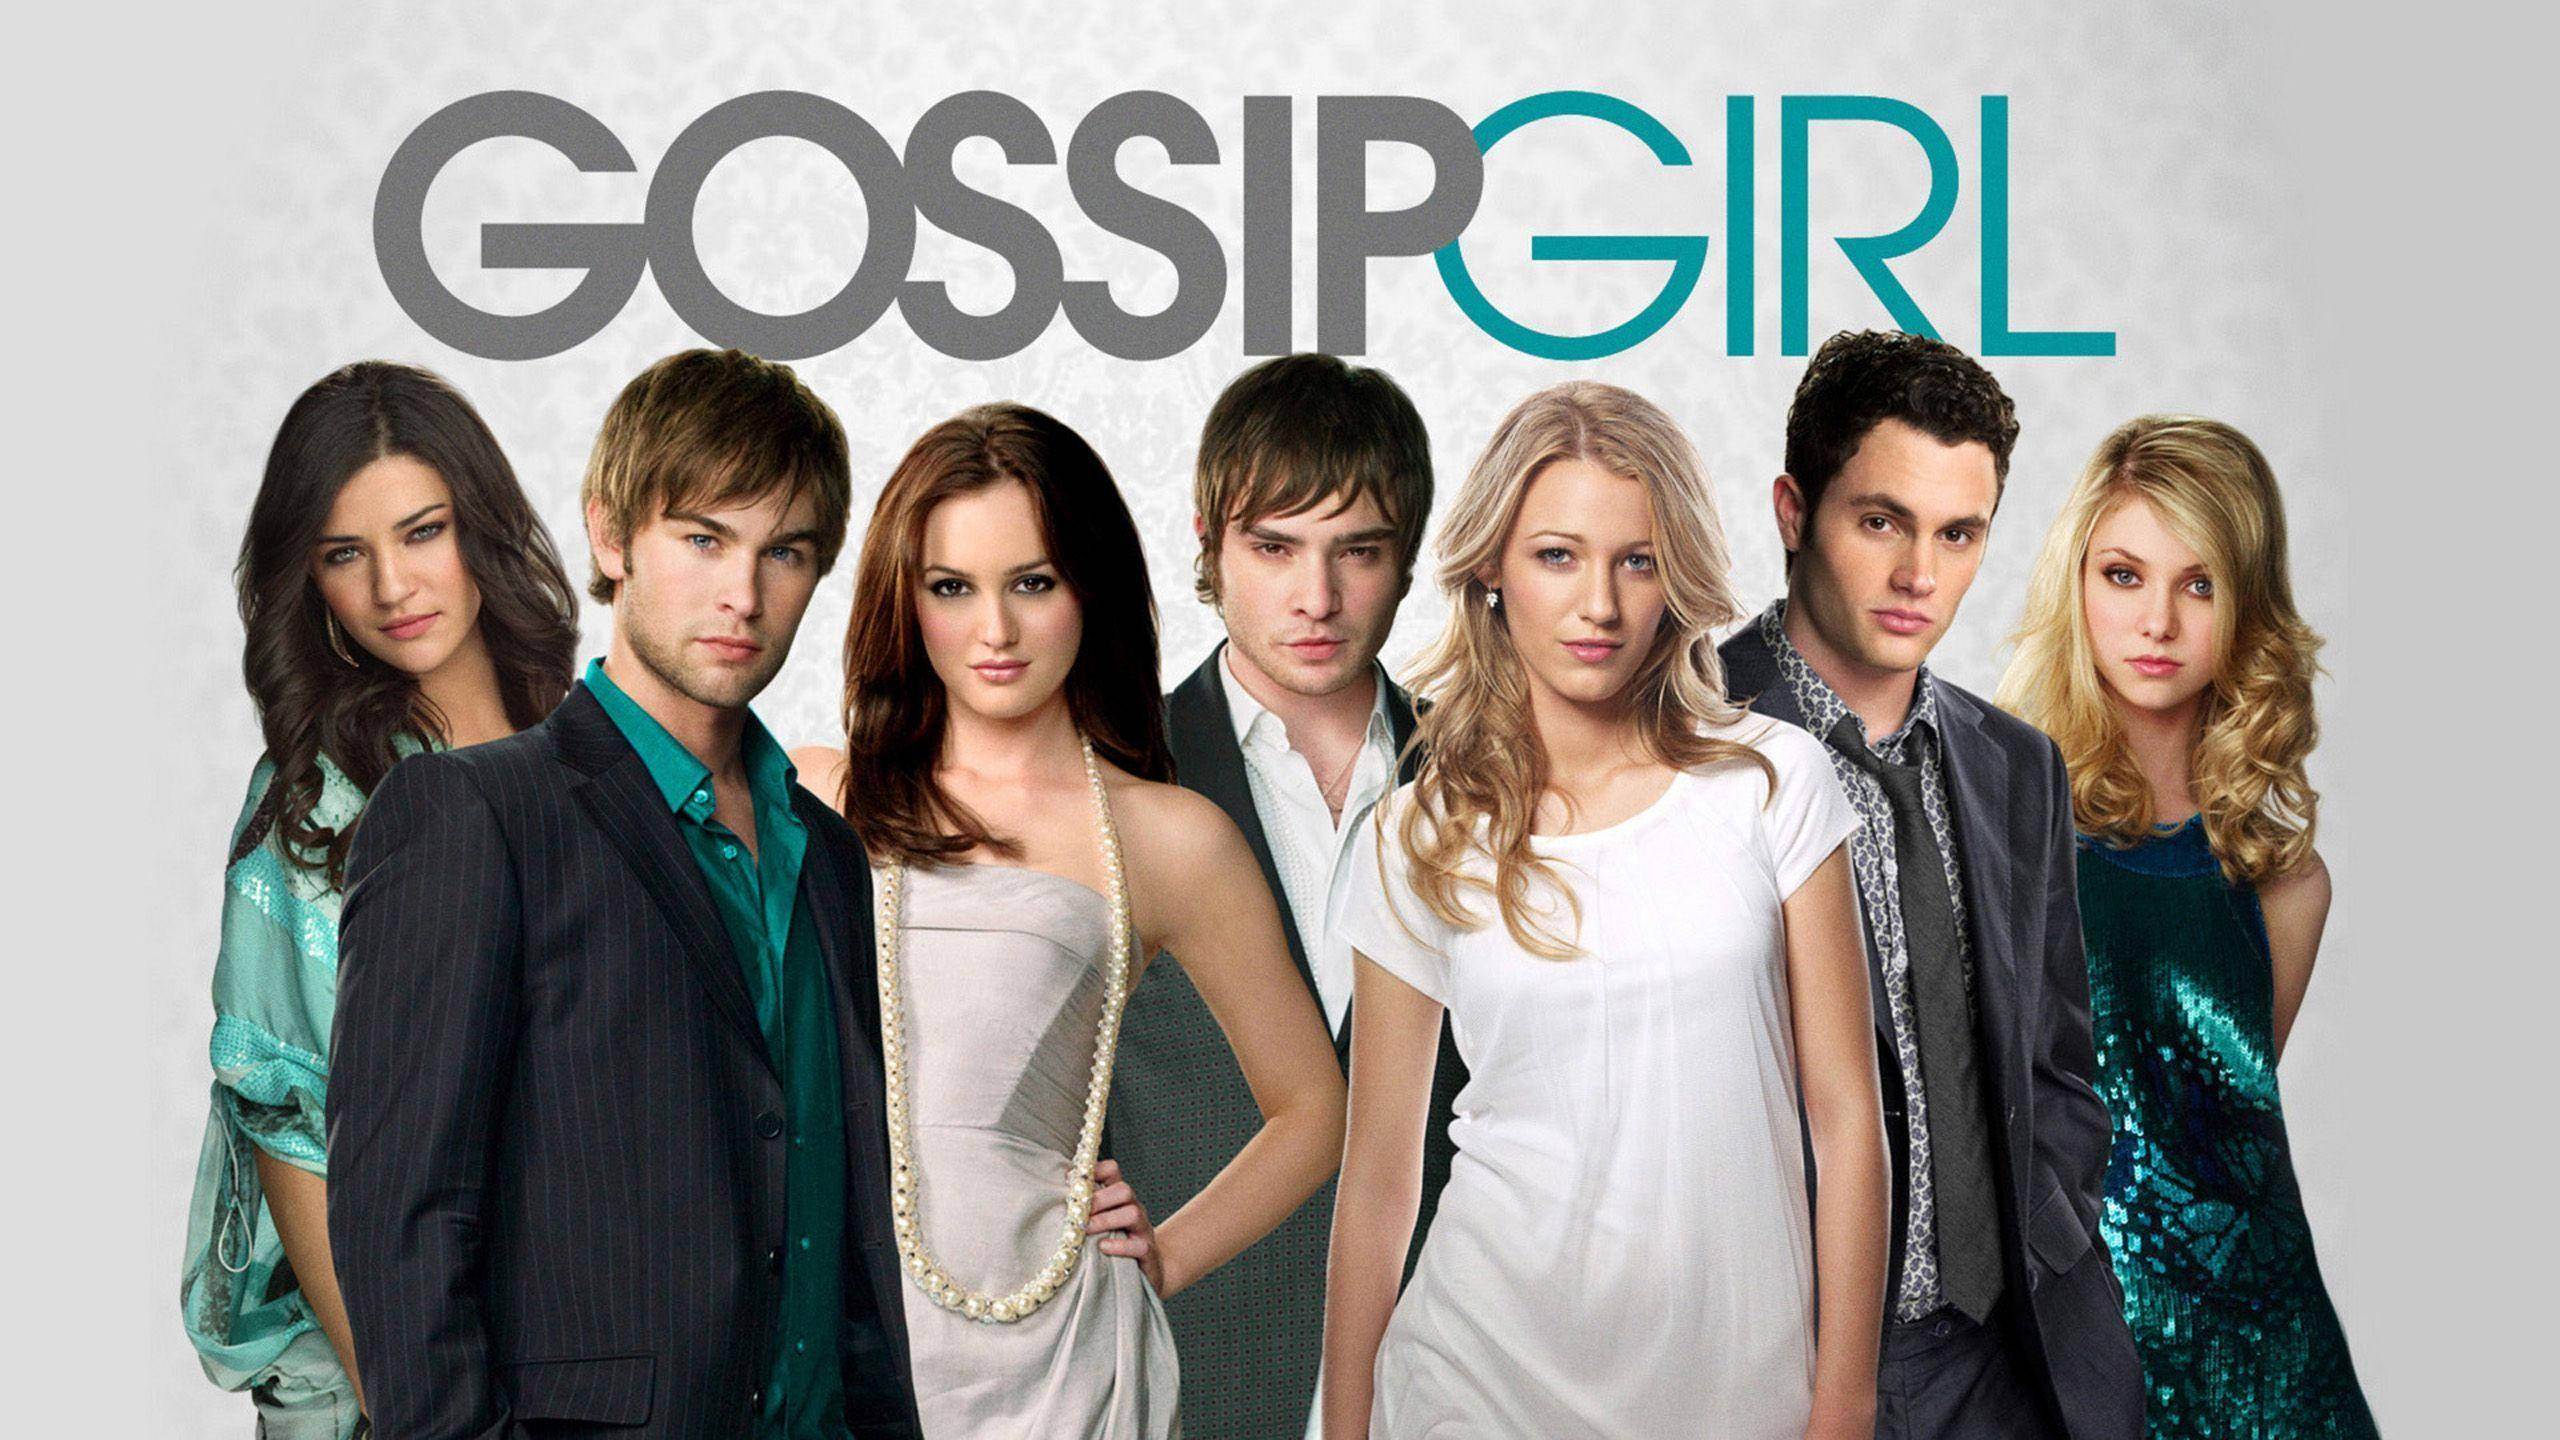 Hbo Gossip Girl Poster Wallpapers